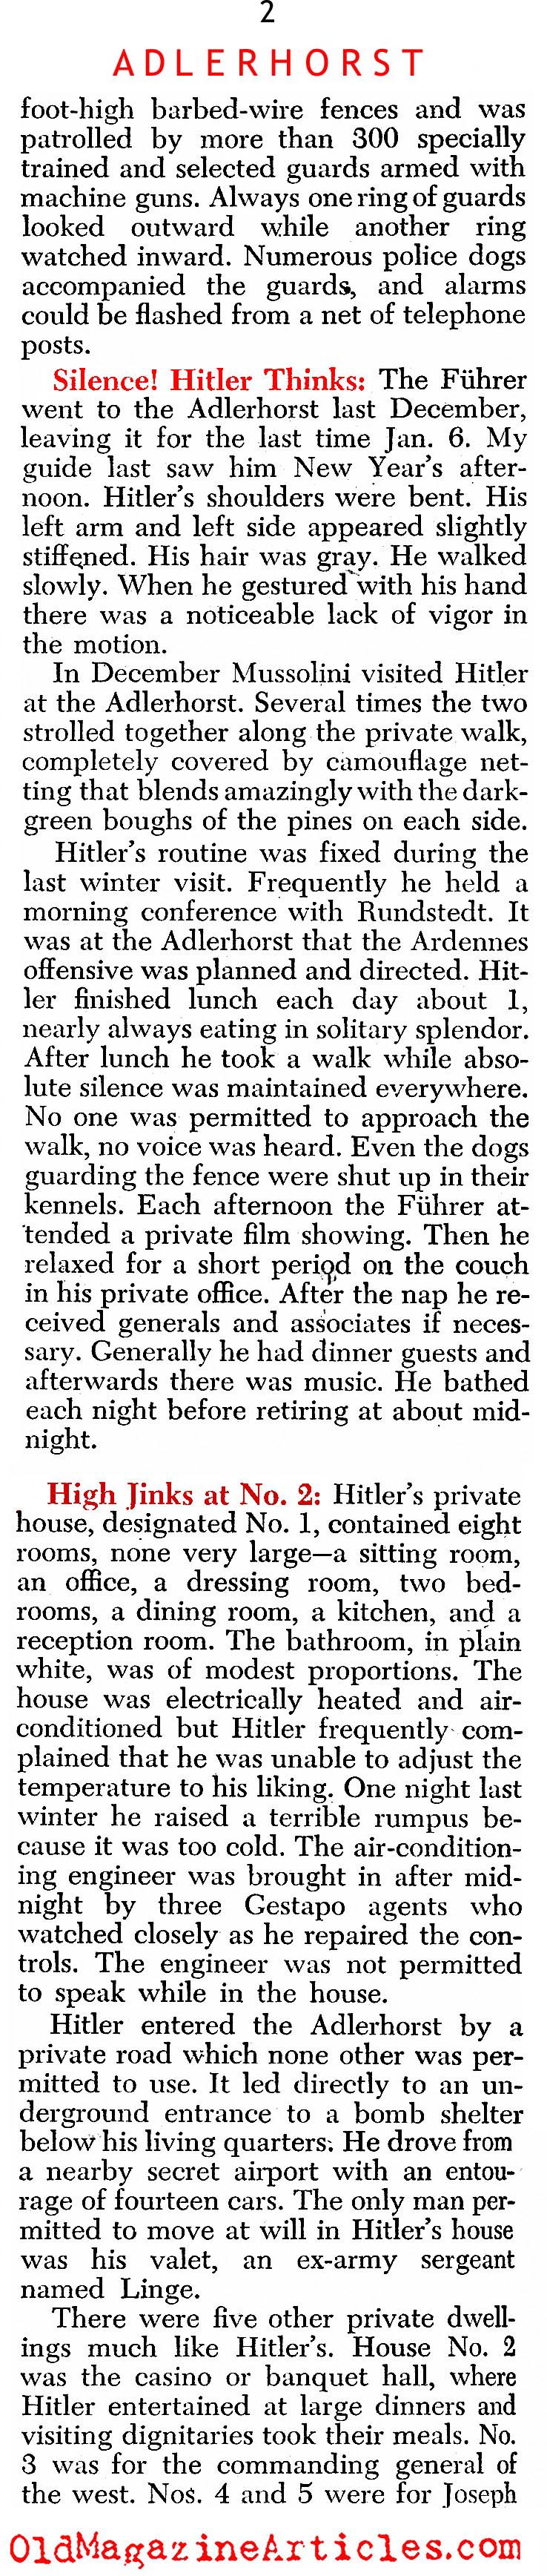 Hitler's Other Address (Newsweek Magazine, 1945)